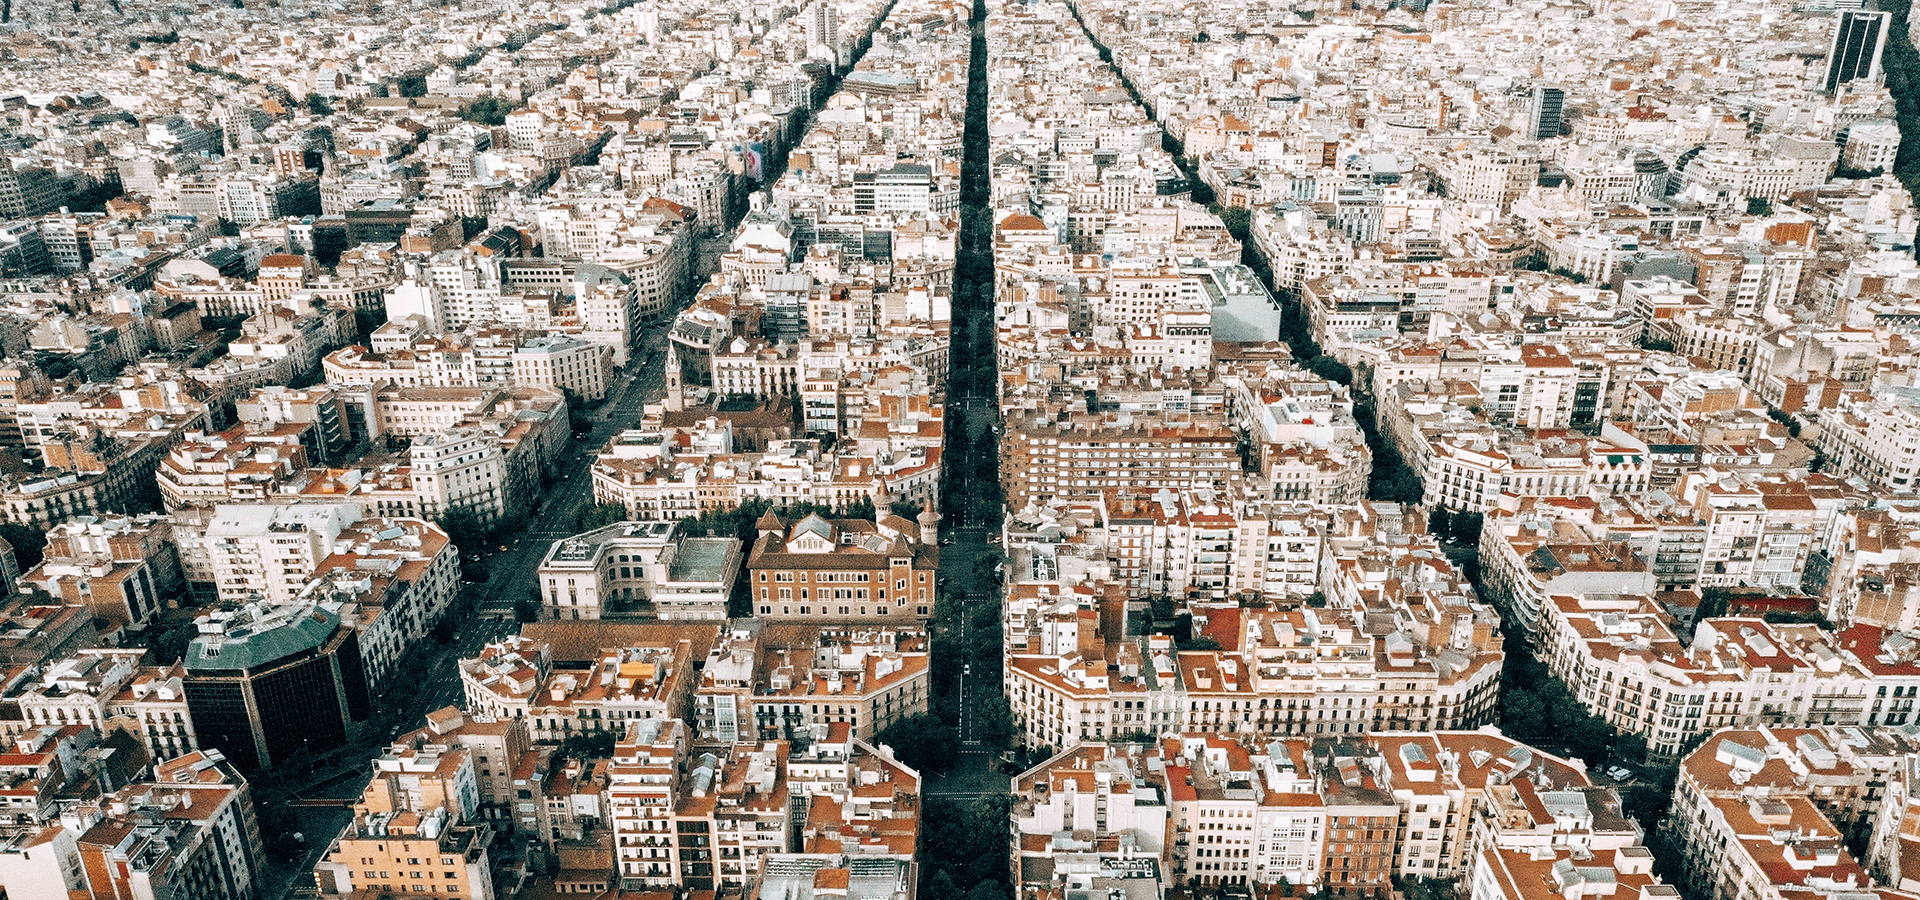 Línea 5, Barcelona